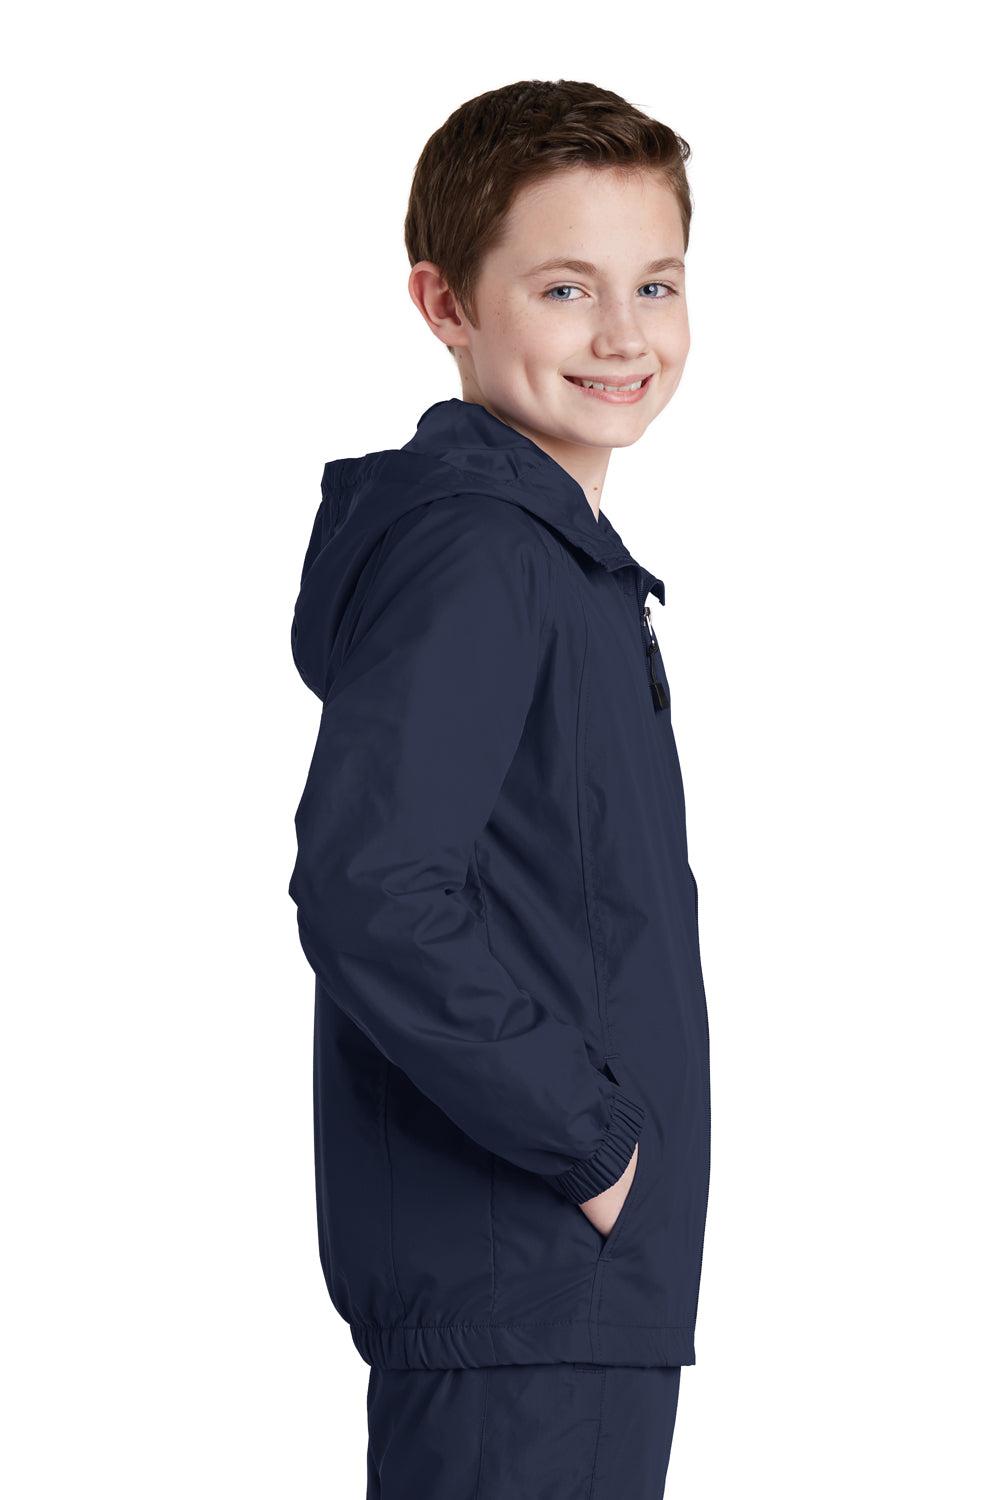 Sport-Tek YST73 Youth Water Resistant Full Zip Hooded Jacket Navy Blue Side